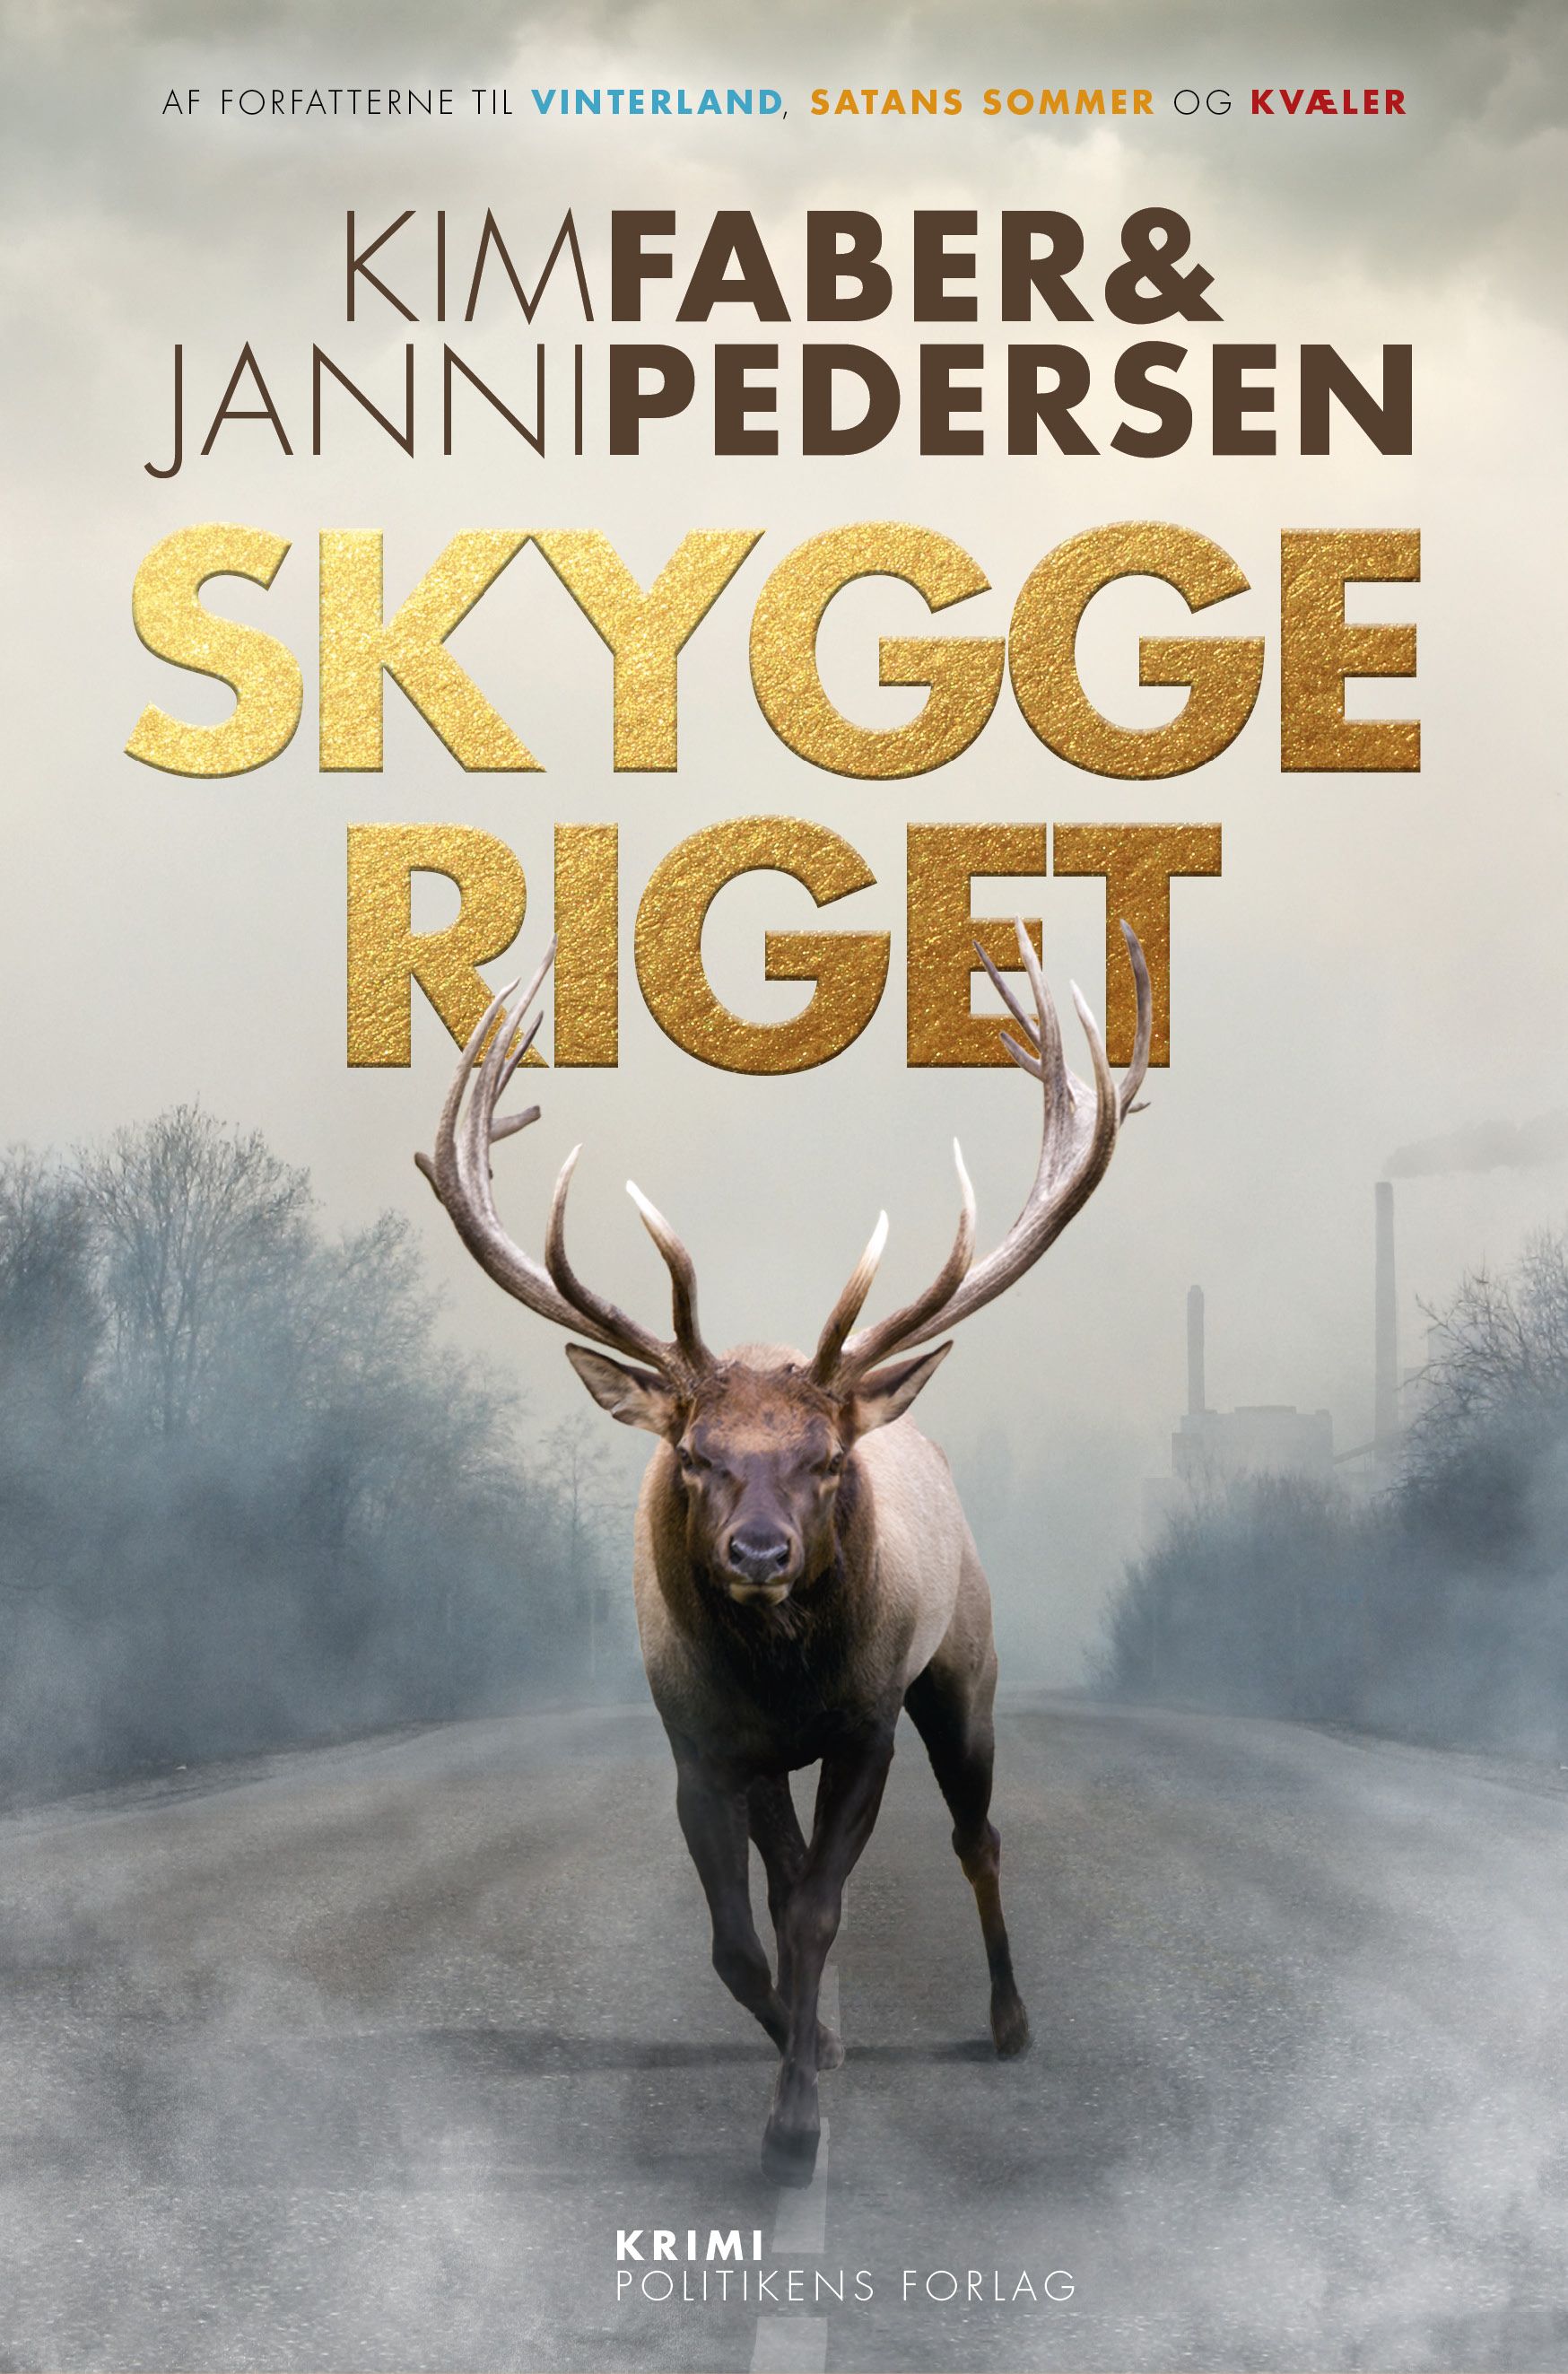 Skyggeriget, eBook by Kim Faber, Janni Pedersen